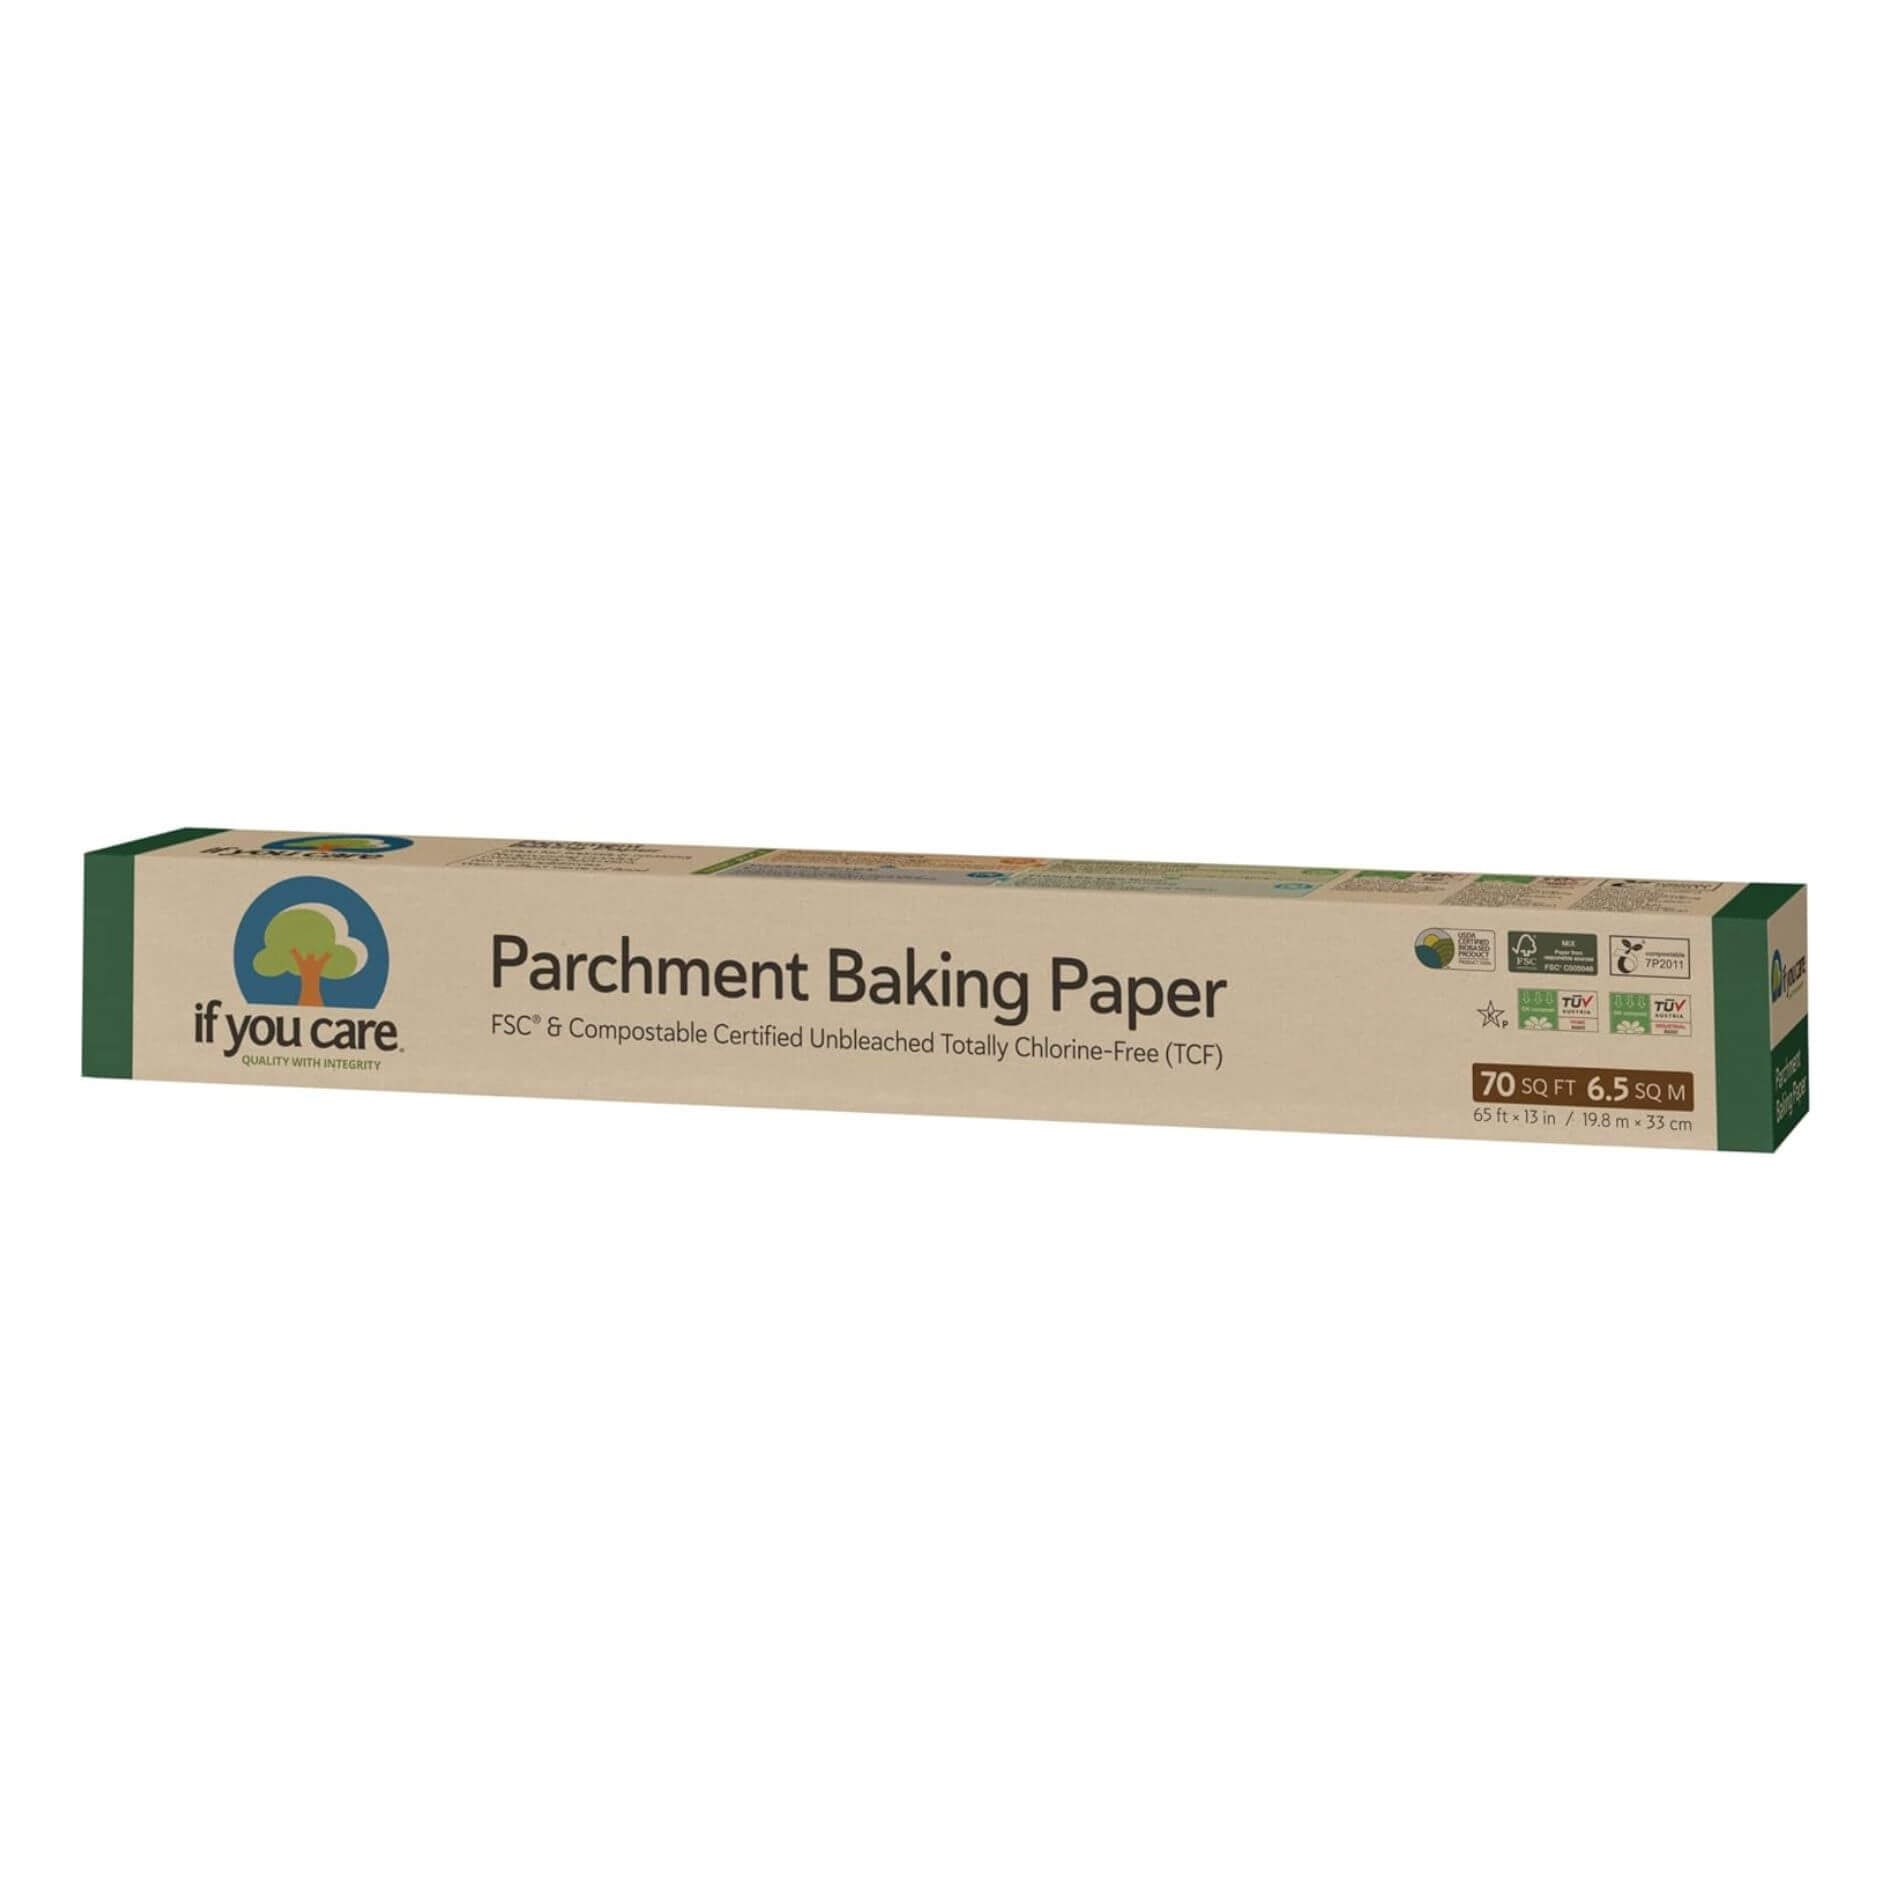 Parchment Baking Paper - 24 Sheets - The Plastic Free Co.